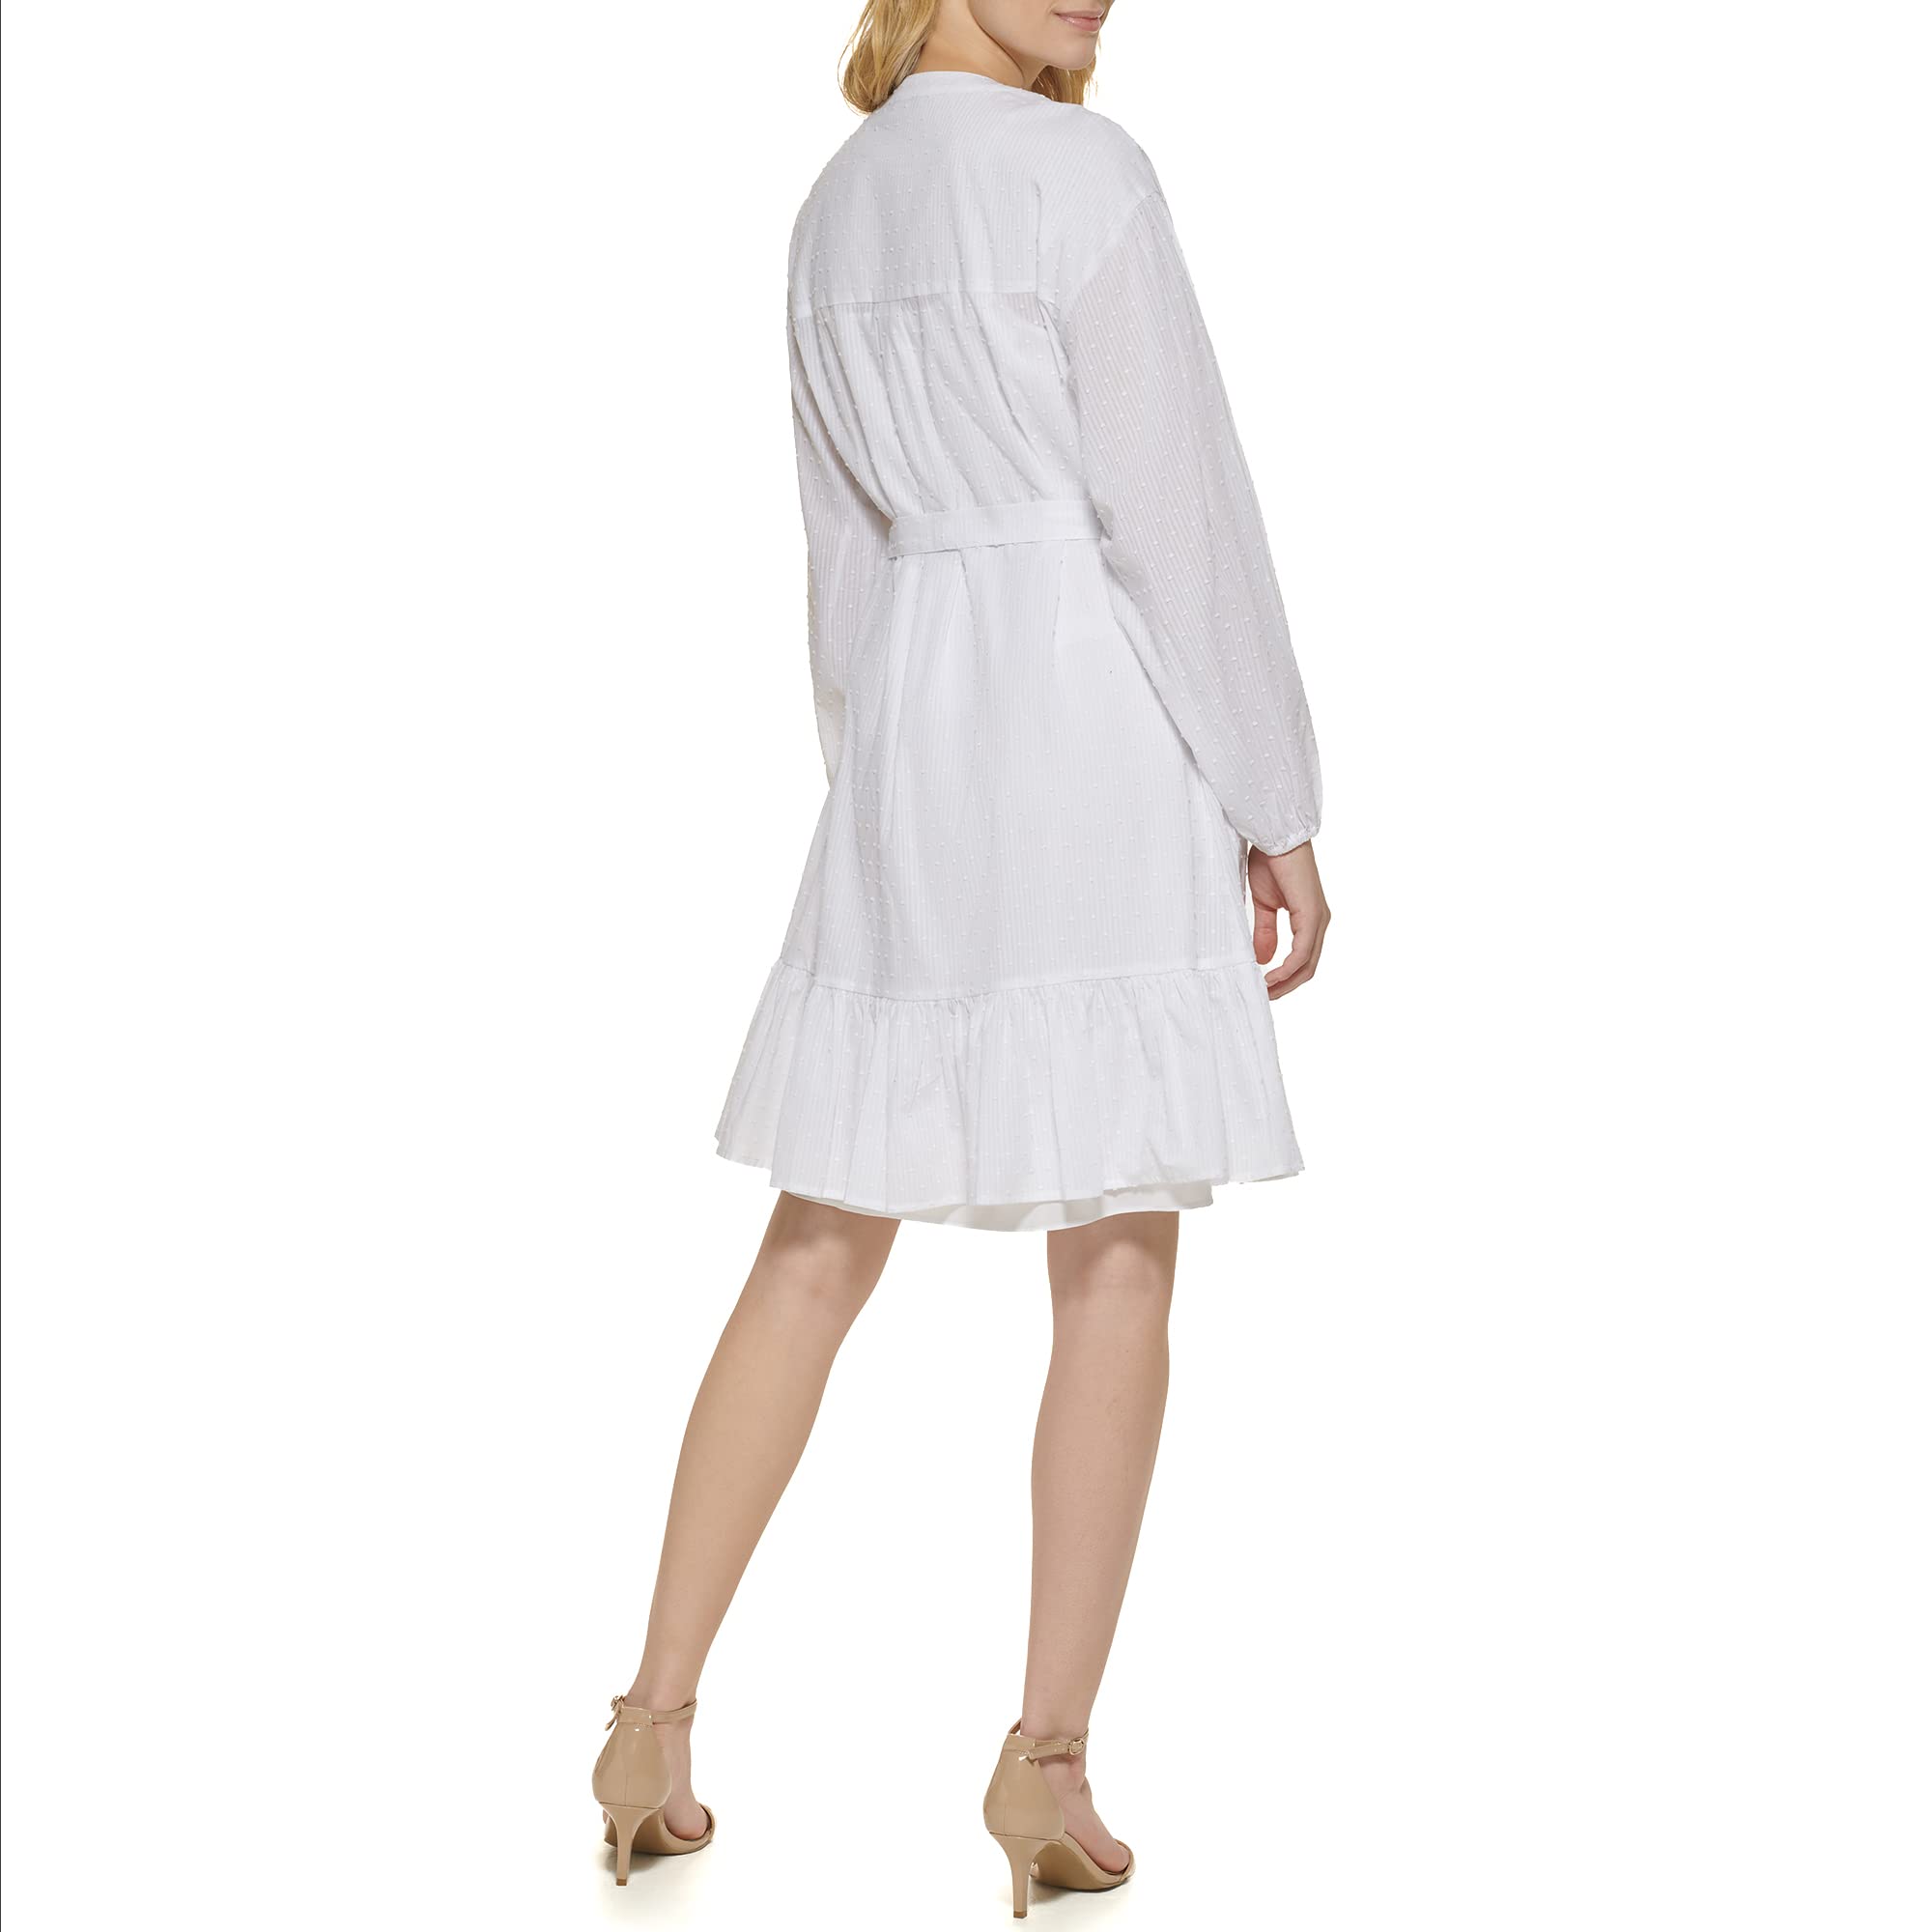 Tommy Hilfiger Women's Chambray Stripe Long Sleeve Shirt Dress